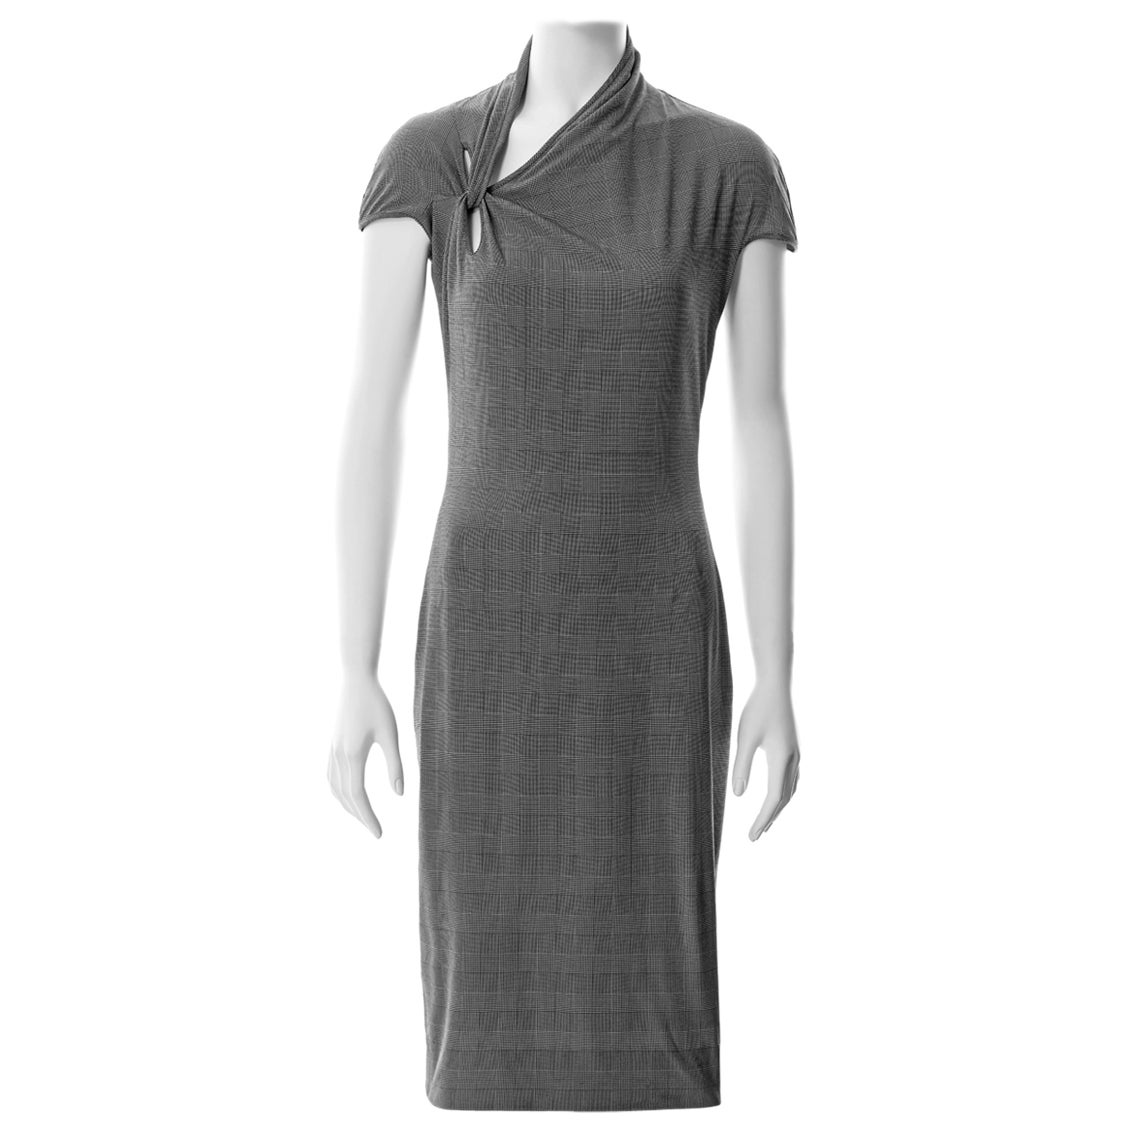 Christian Dior by John Galliano grey checked nylon sheath dress, ss 2000 For Sale